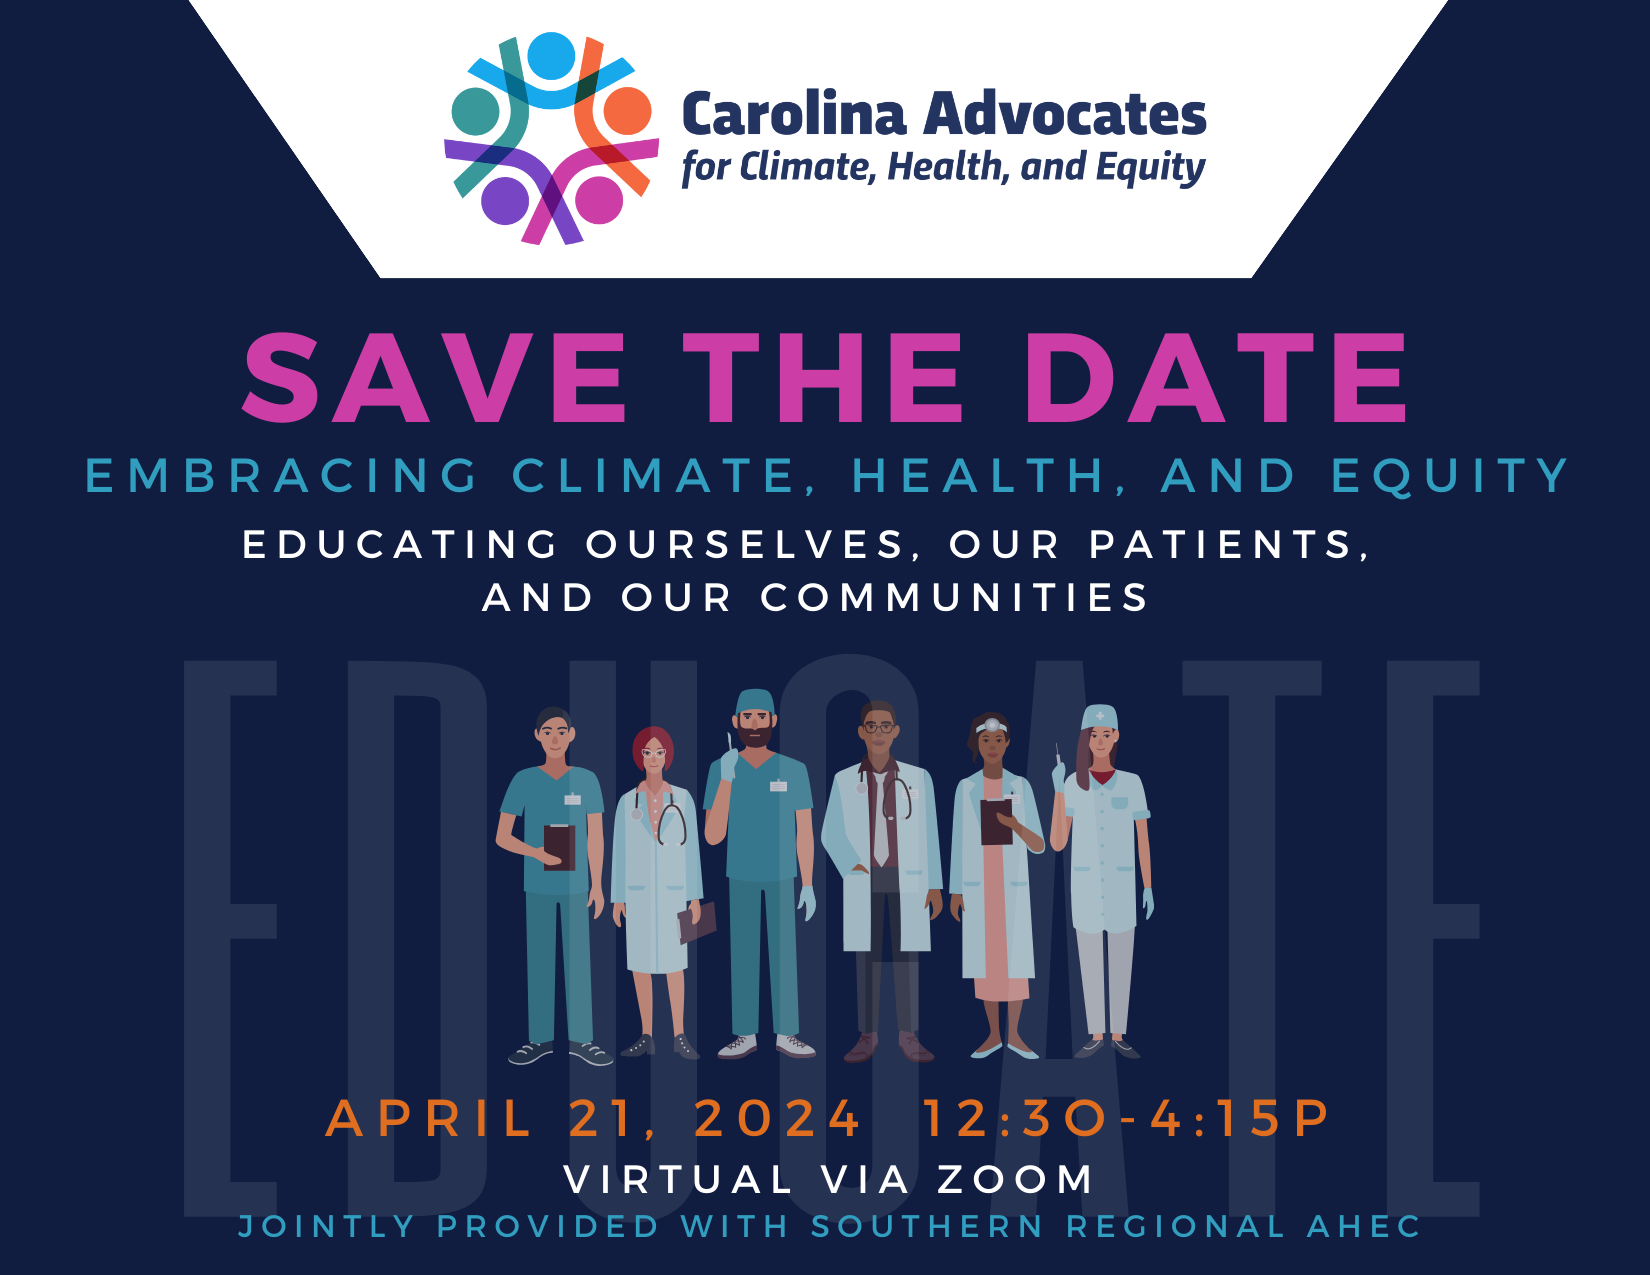 Carolina Advocates for Climate, Health and Equity.